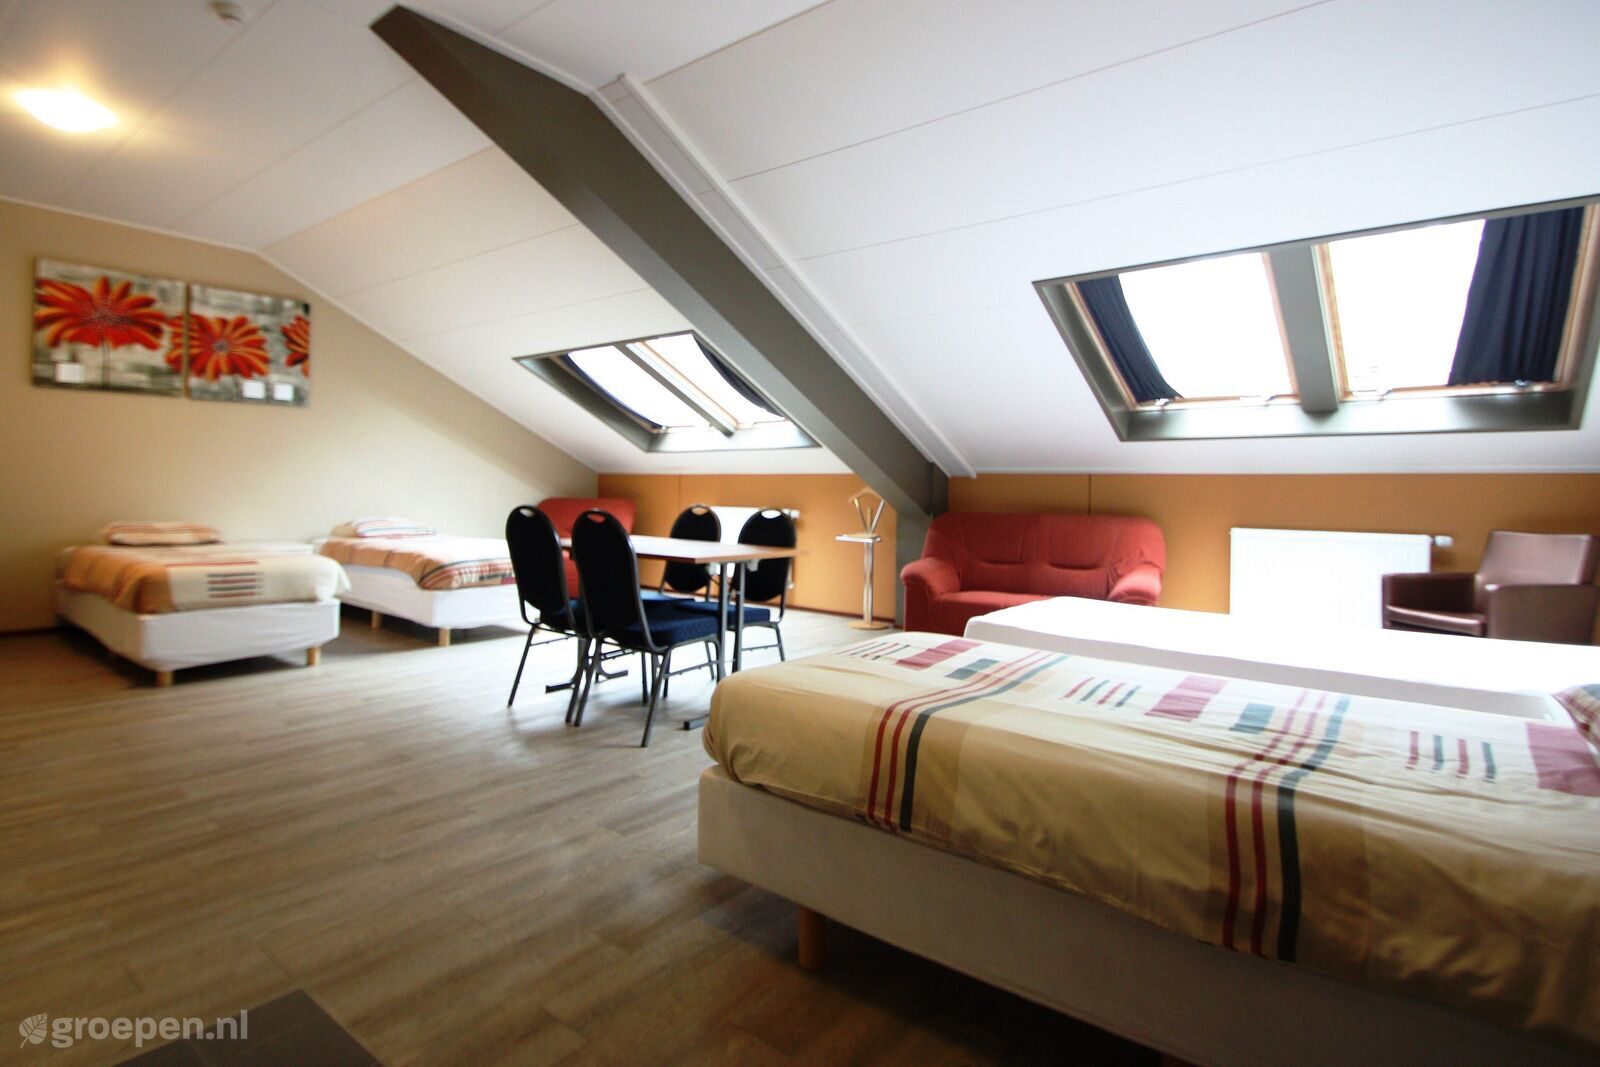 Group accommodation Alphen